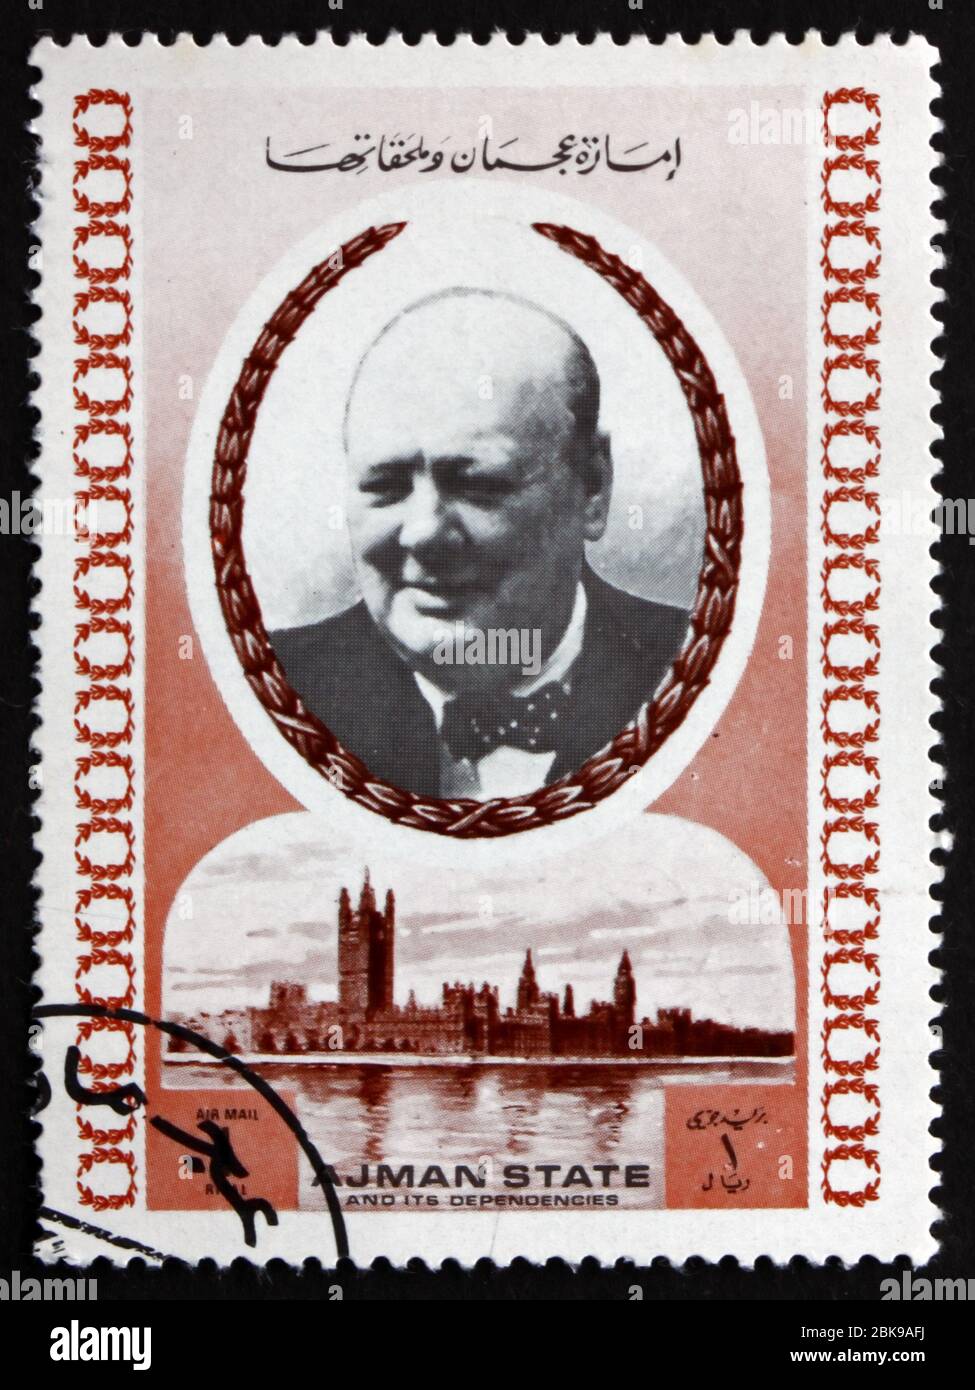 AJMAN - ALREDEDOR de 1972: Un sello impreso en Ajman muestra a Winston Churchill, político británico, dos veces primer Ministro del Reino Unido, alrededor de 1972 Foto de stock